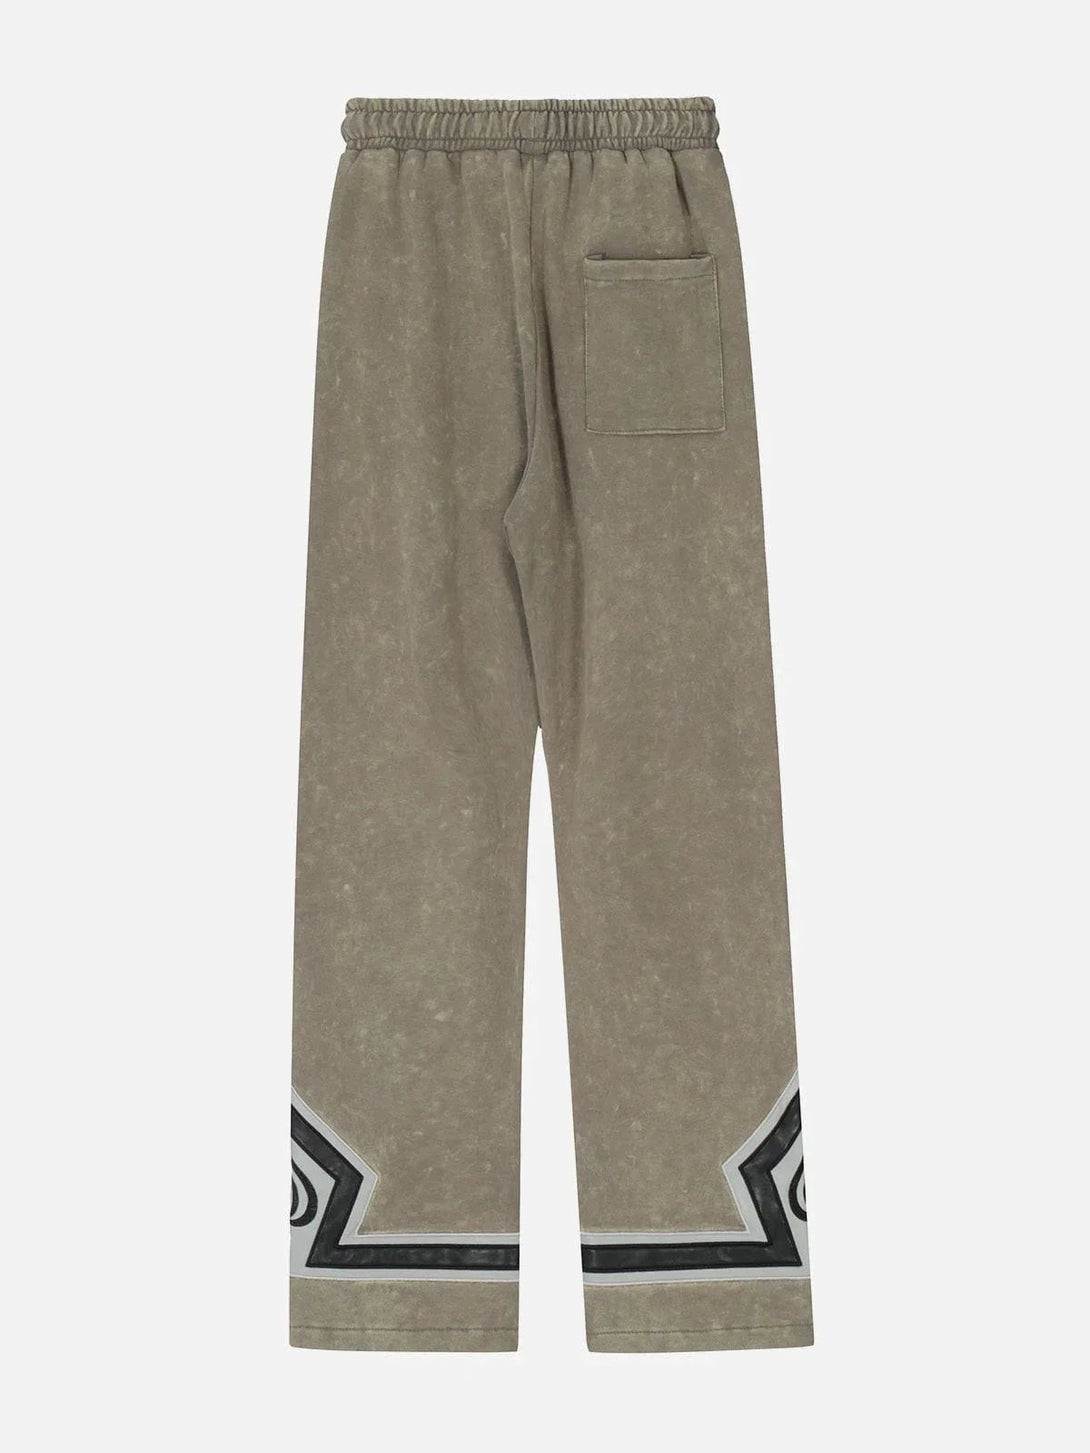 Majesda® - Spade Patch Pants outfit ideas streetwear fashion